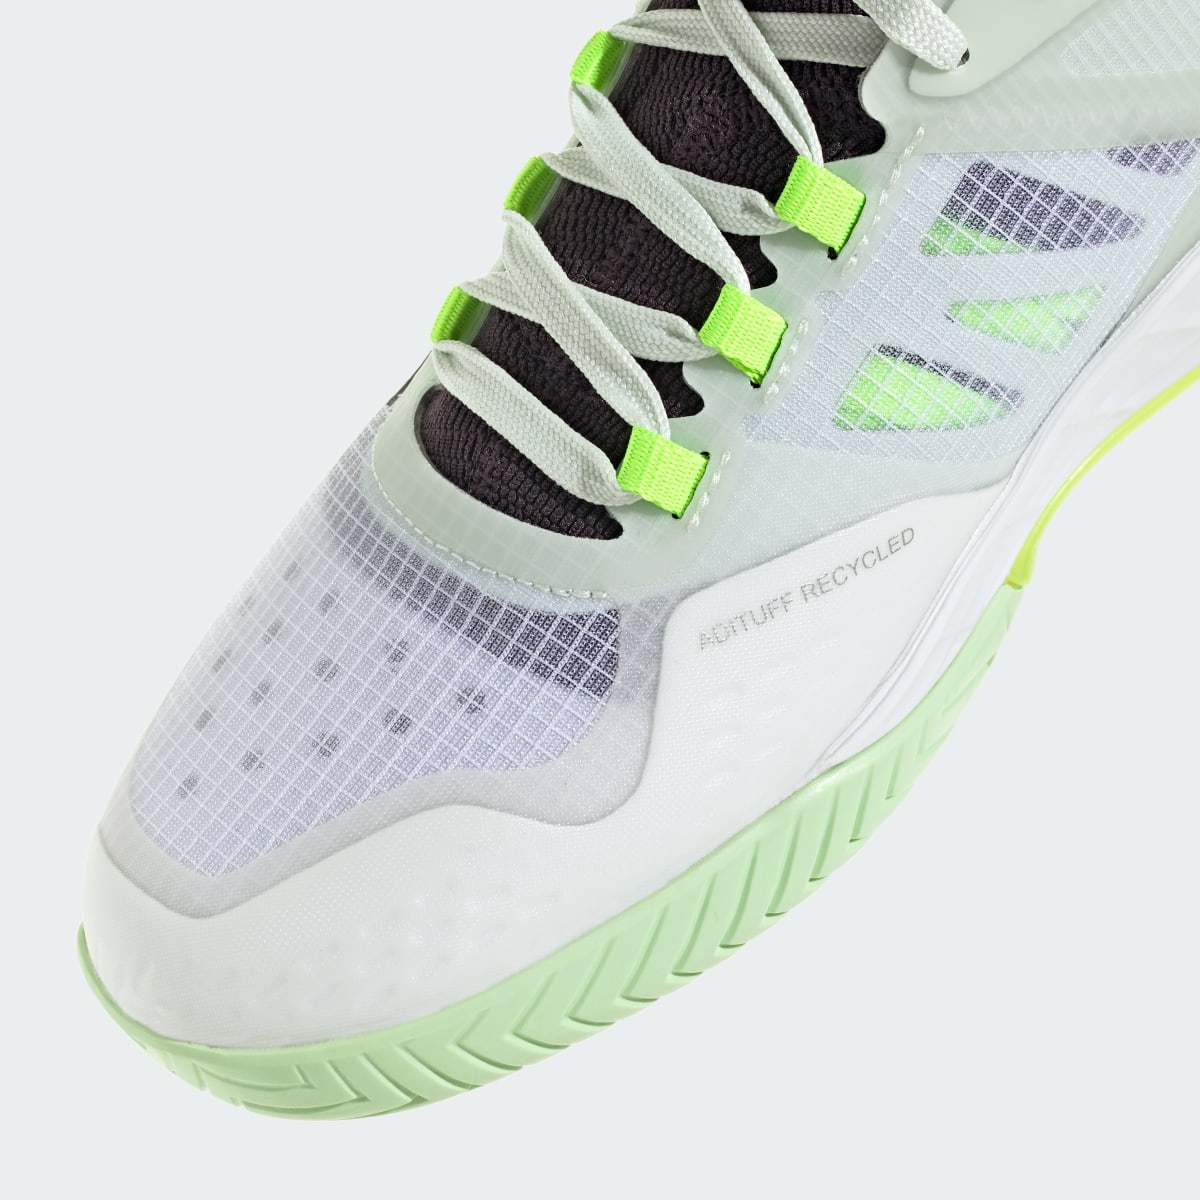 Adidas Scarpe da tennis adizero Ubersonic 4.1. 4